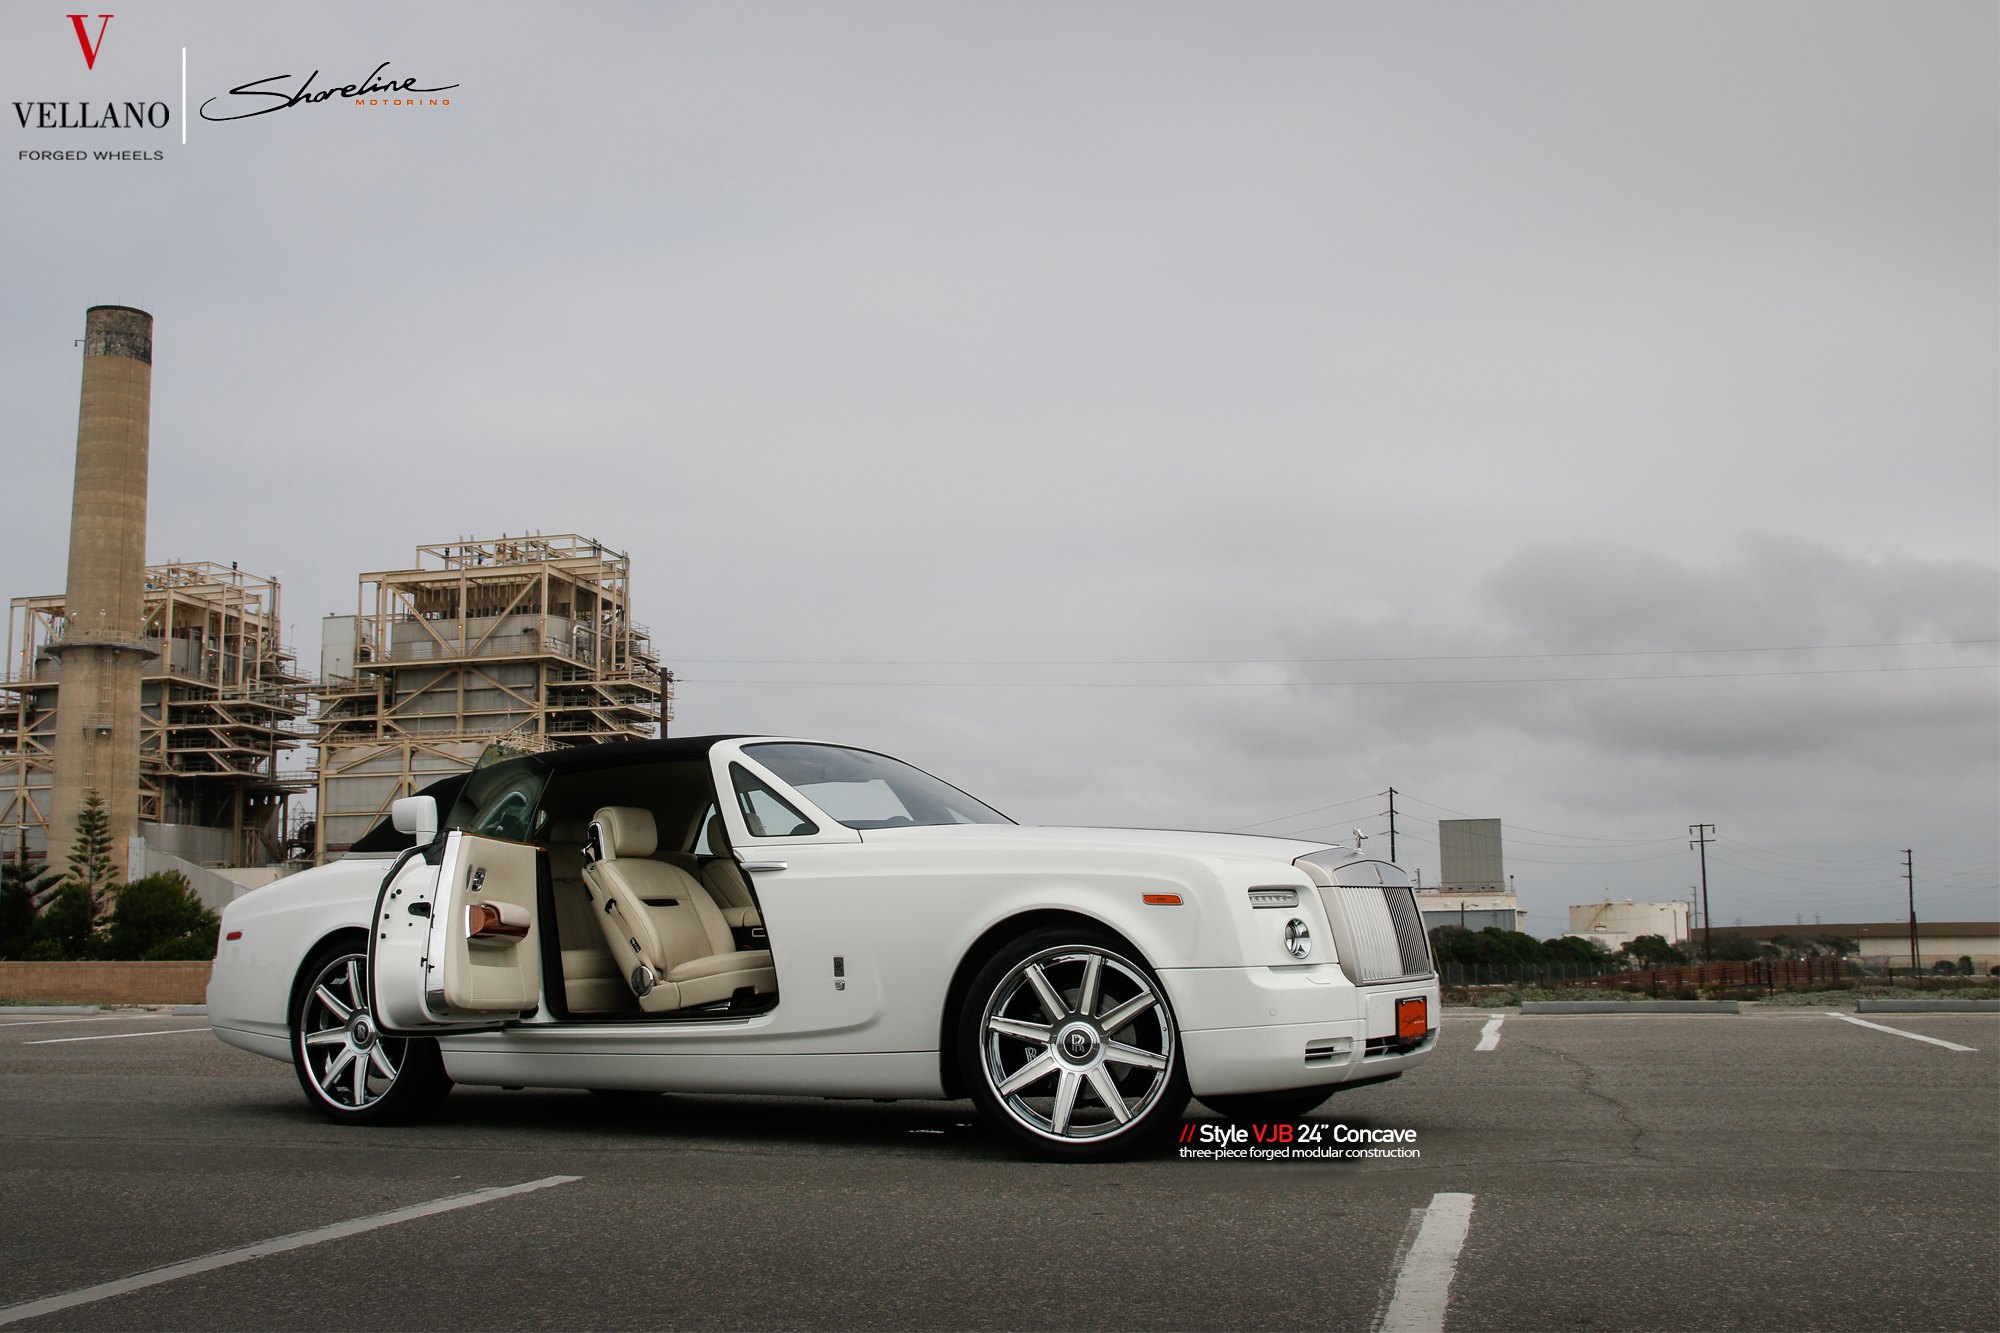 White Rolls Royce Phantom with Vellano Wheels - Photo by Vellano